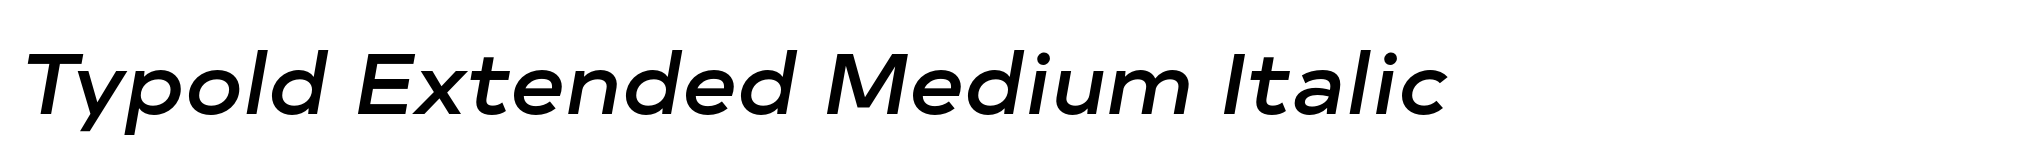 Typold Extended Medium Italic image